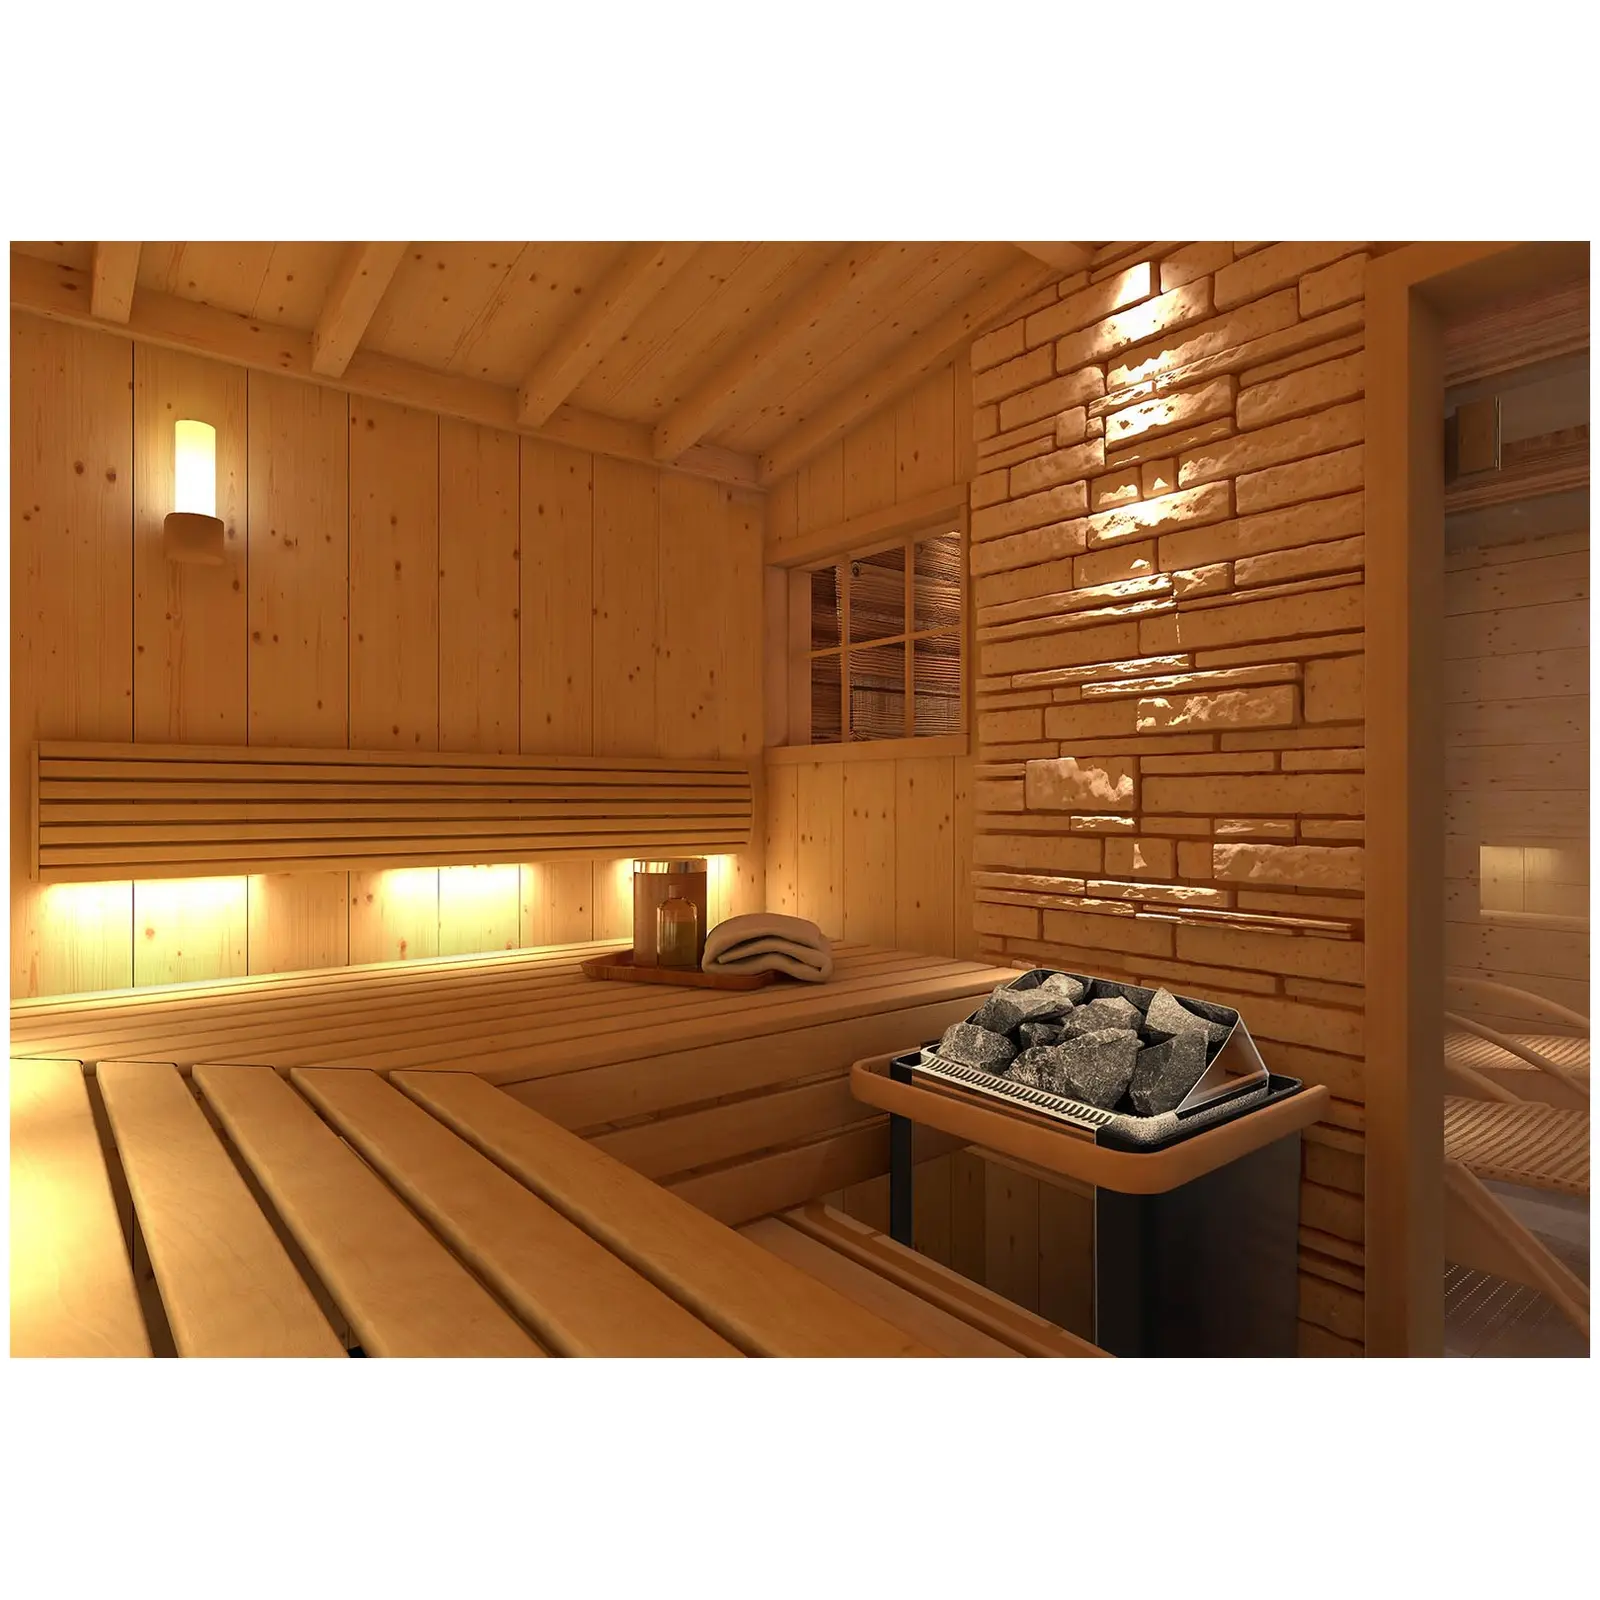 Aquecedor para sauna - elétrico - 8 kW